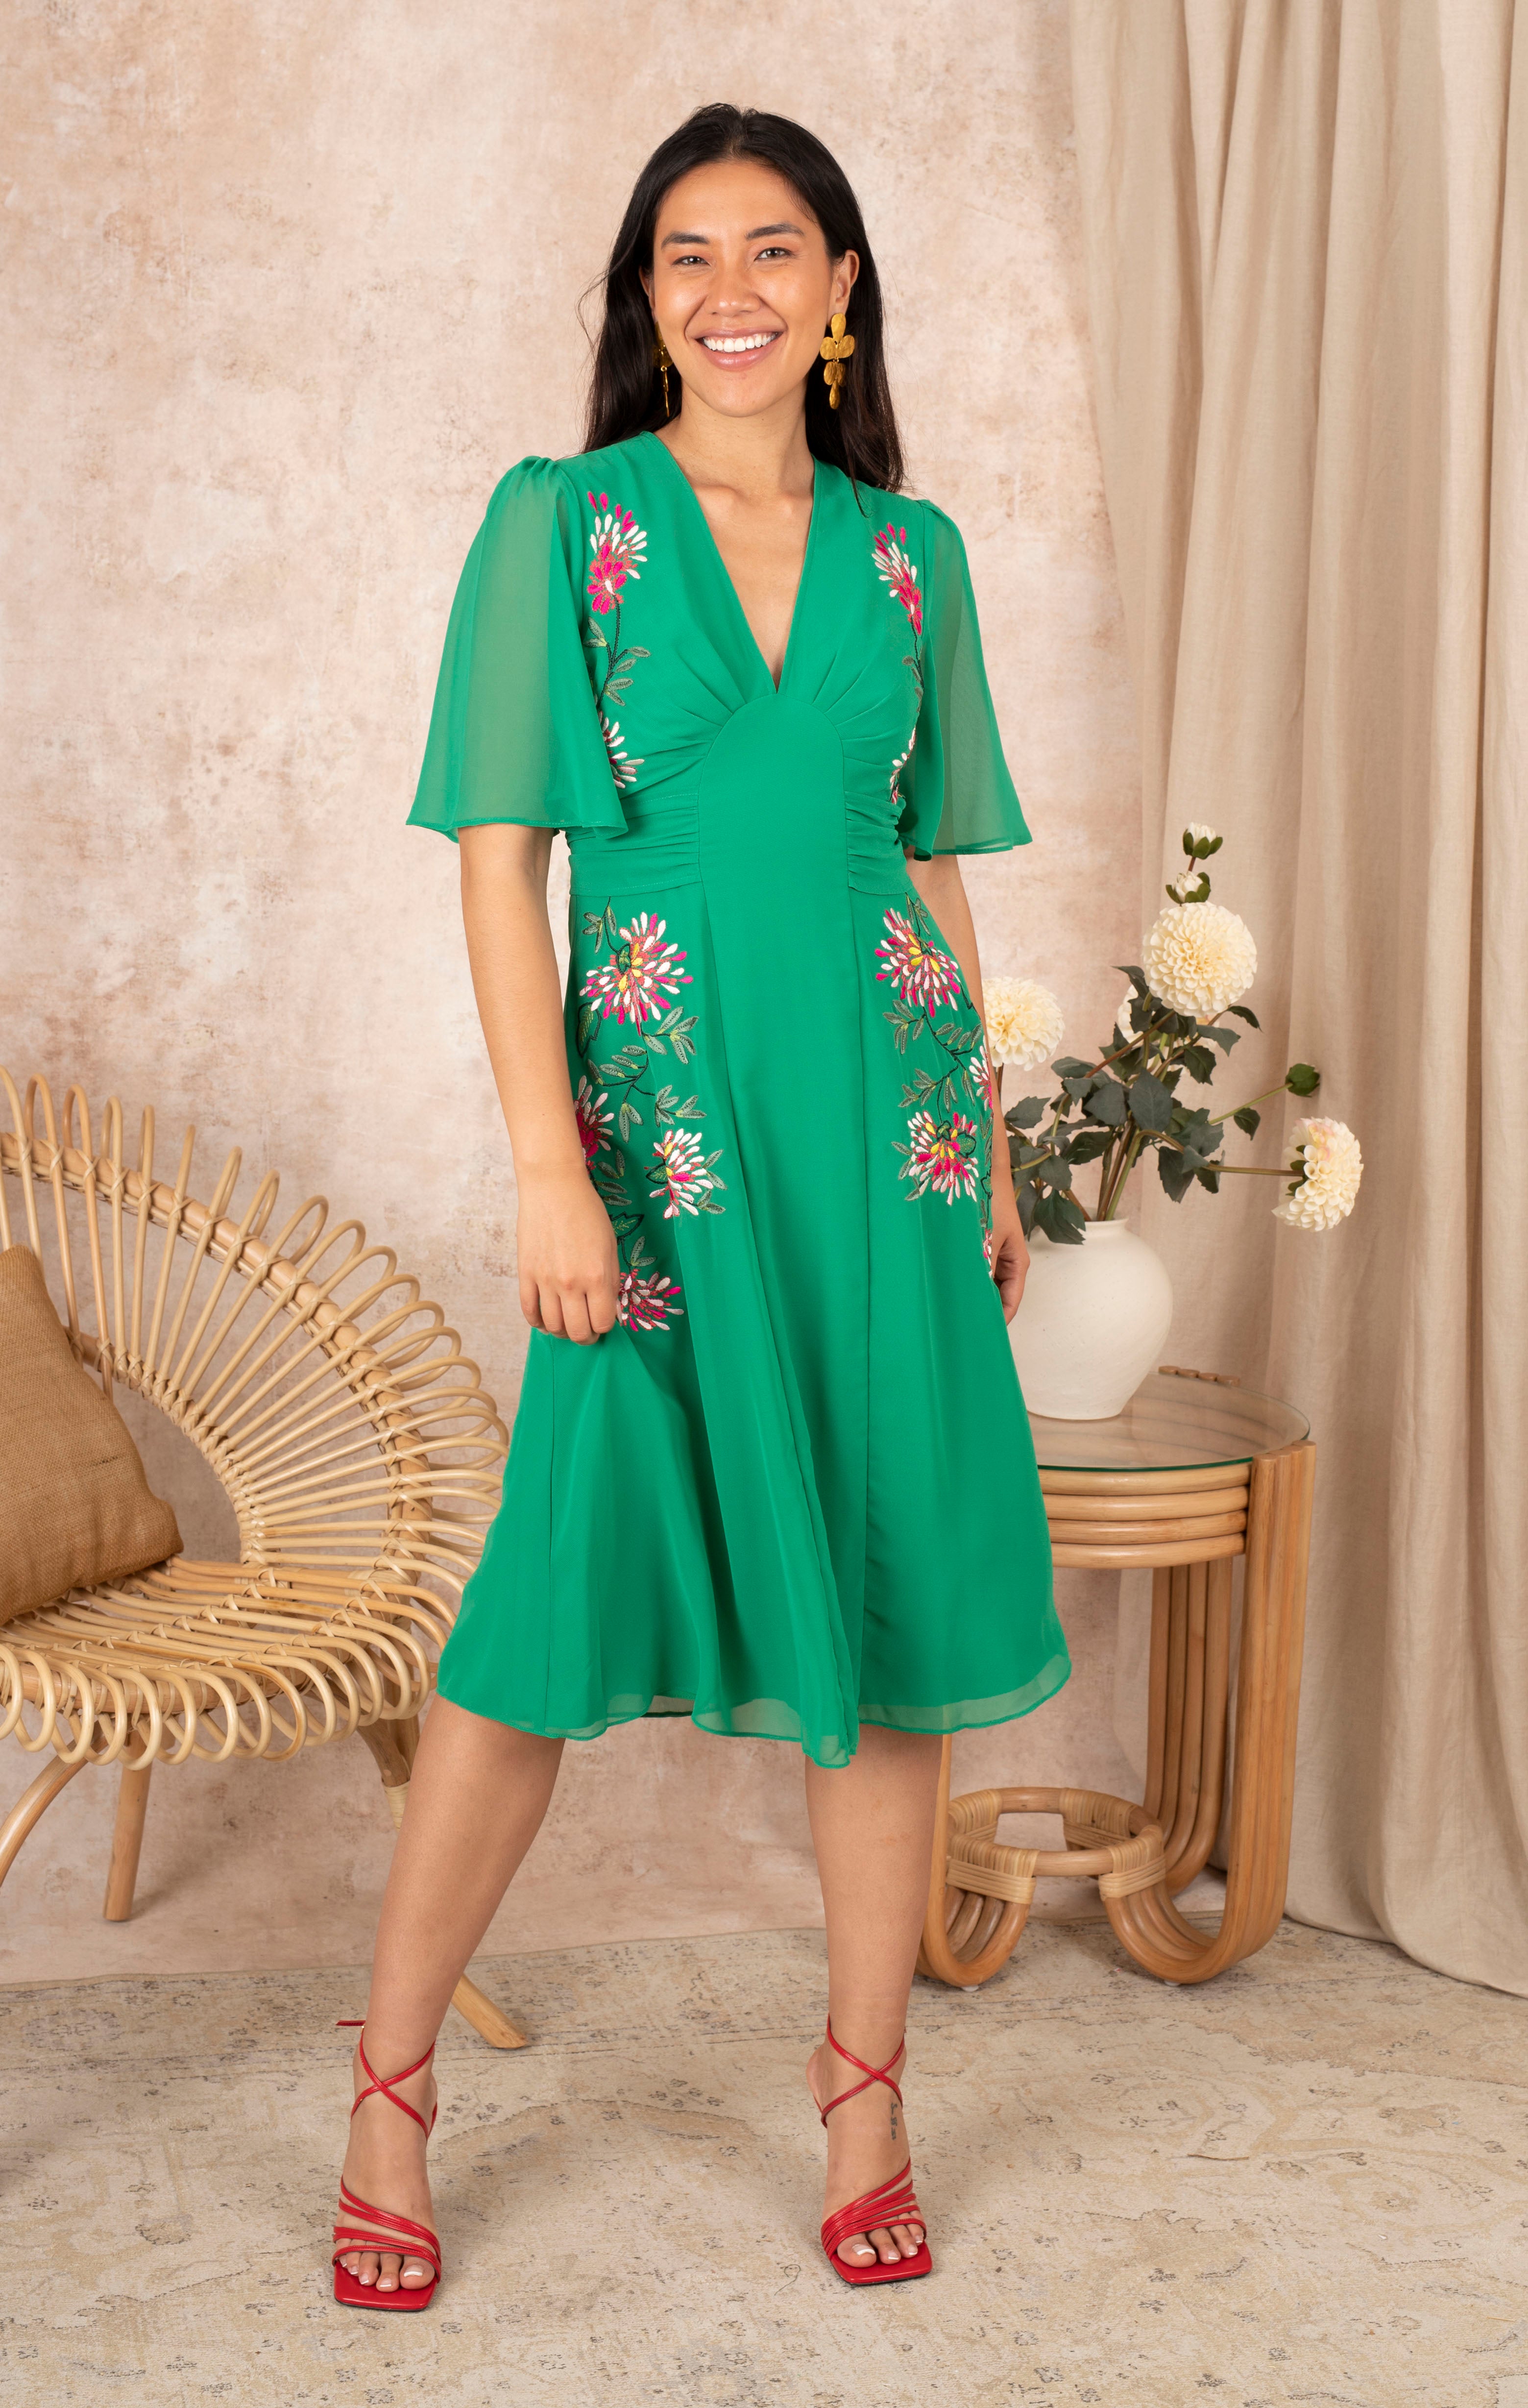 green midi dress perfect for occasion wear